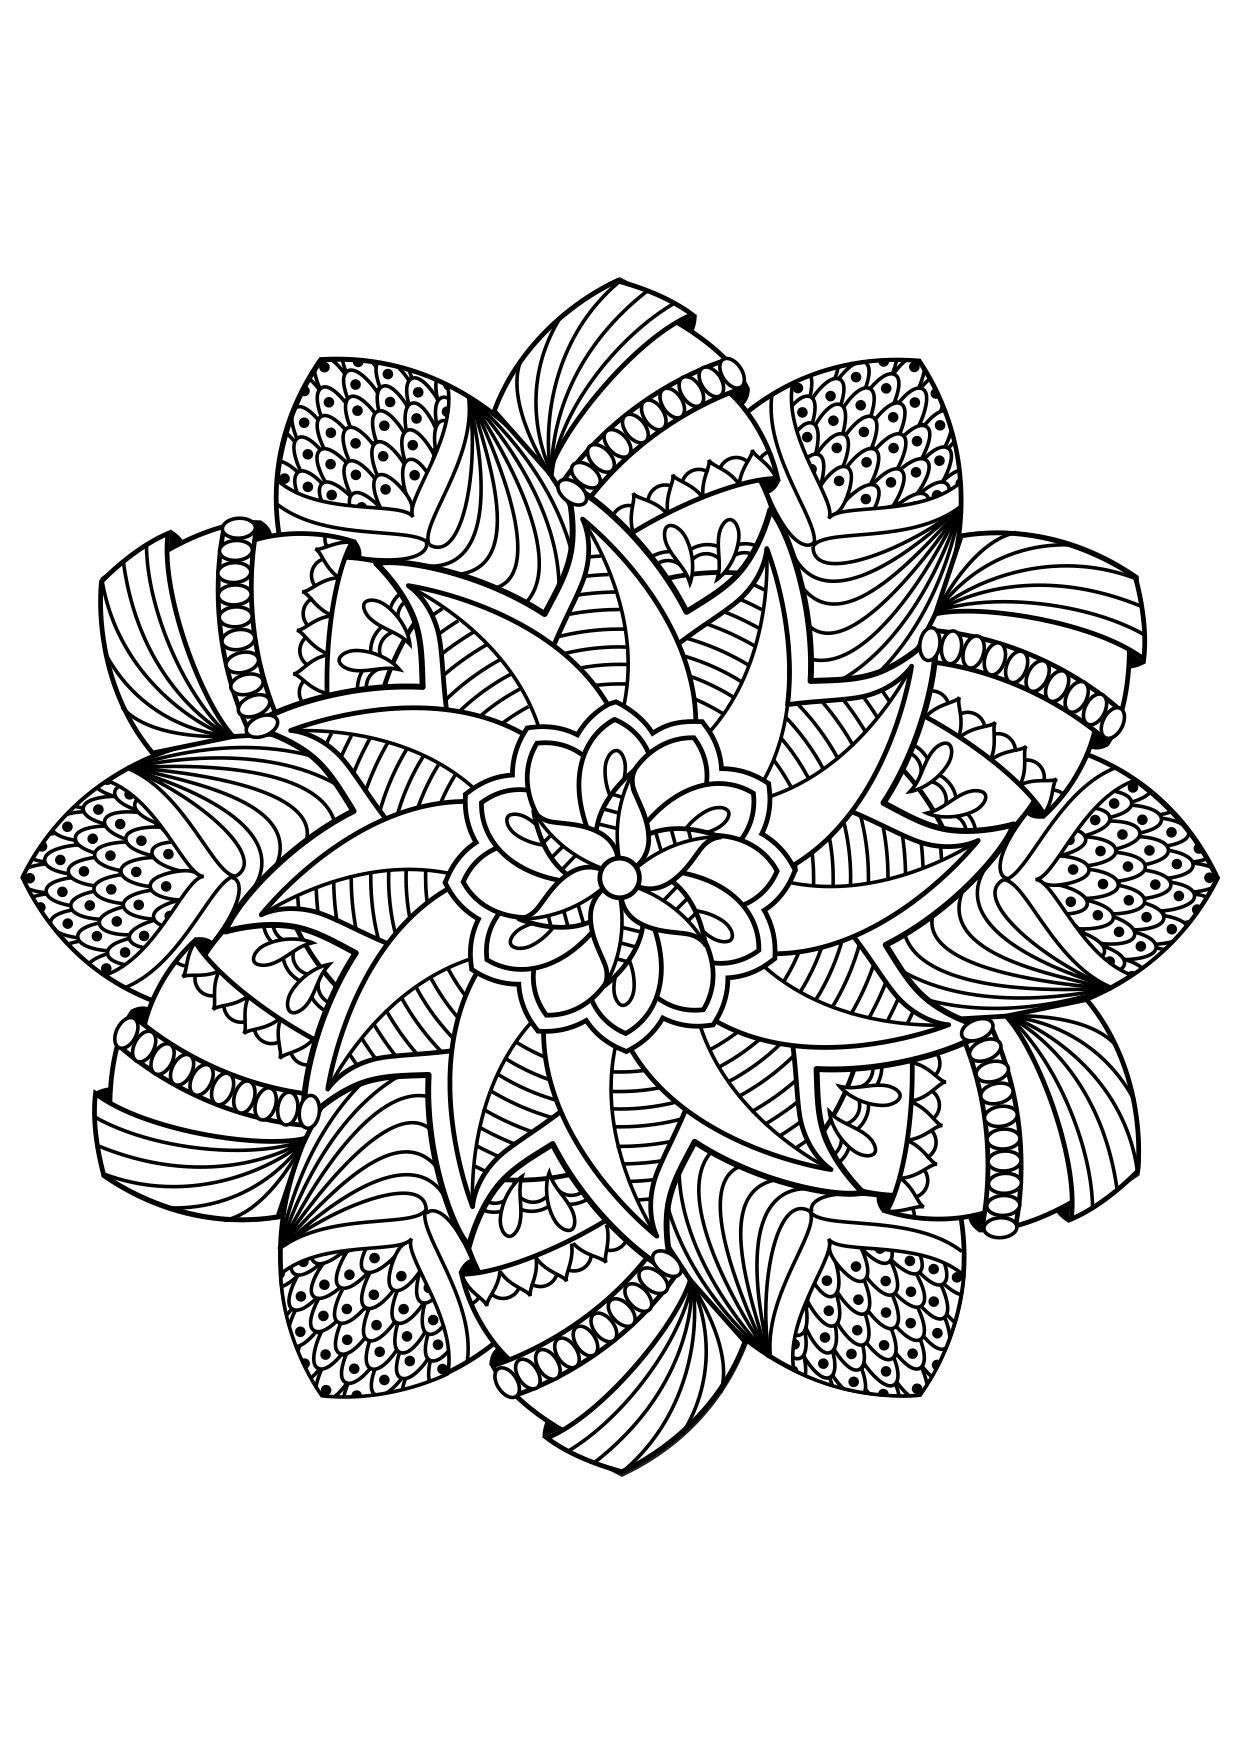 Målarbild Mandala